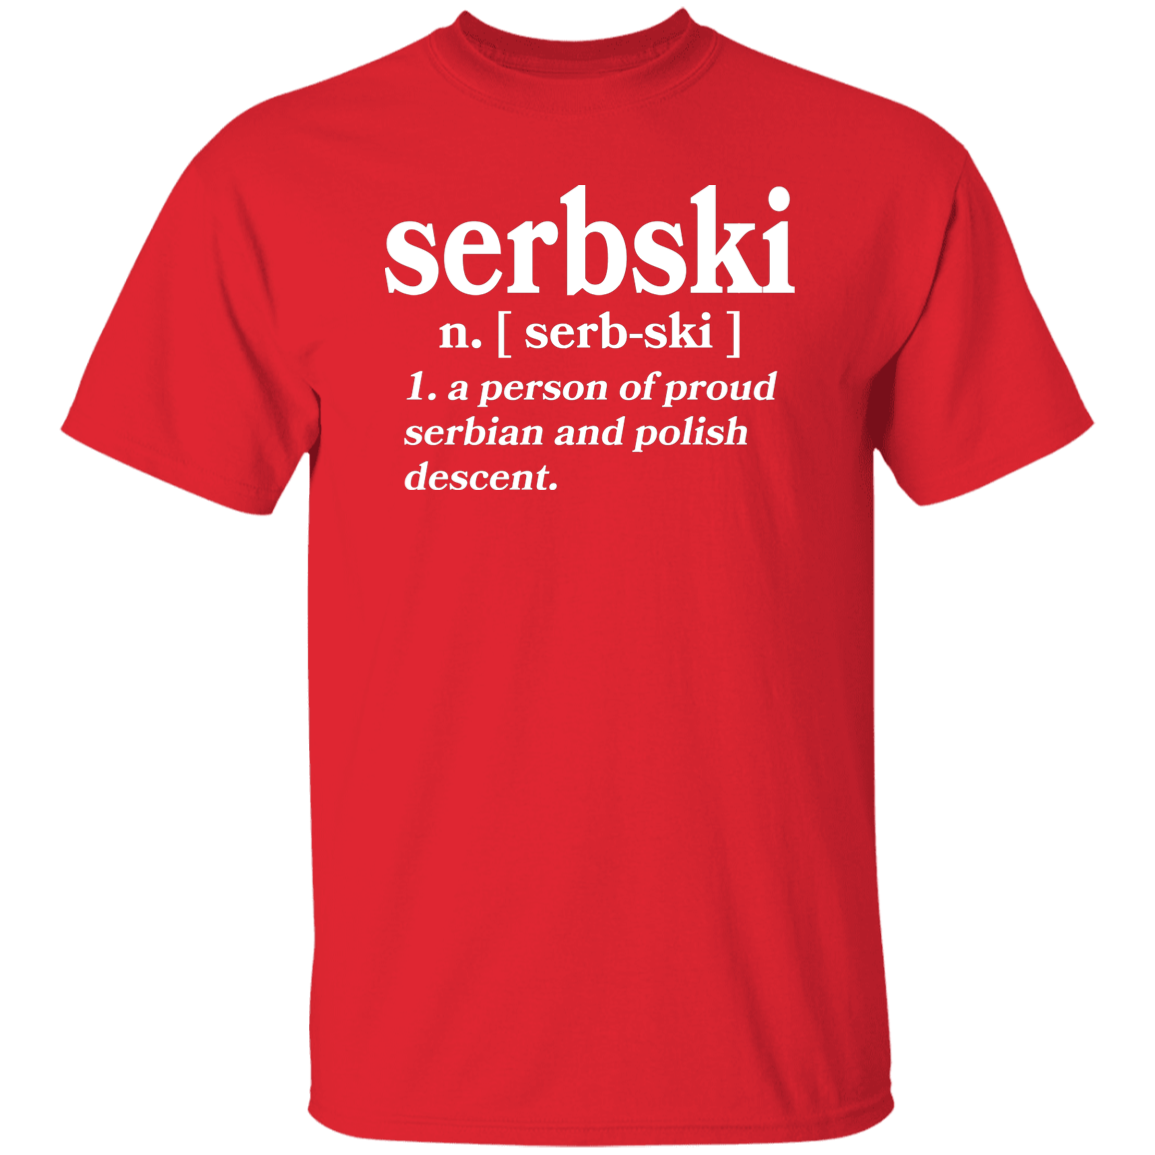 Serbski A Person Of Serbian and Polish Descent Apparel CustomCat G500 5.3 oz. T-Shirt Red S